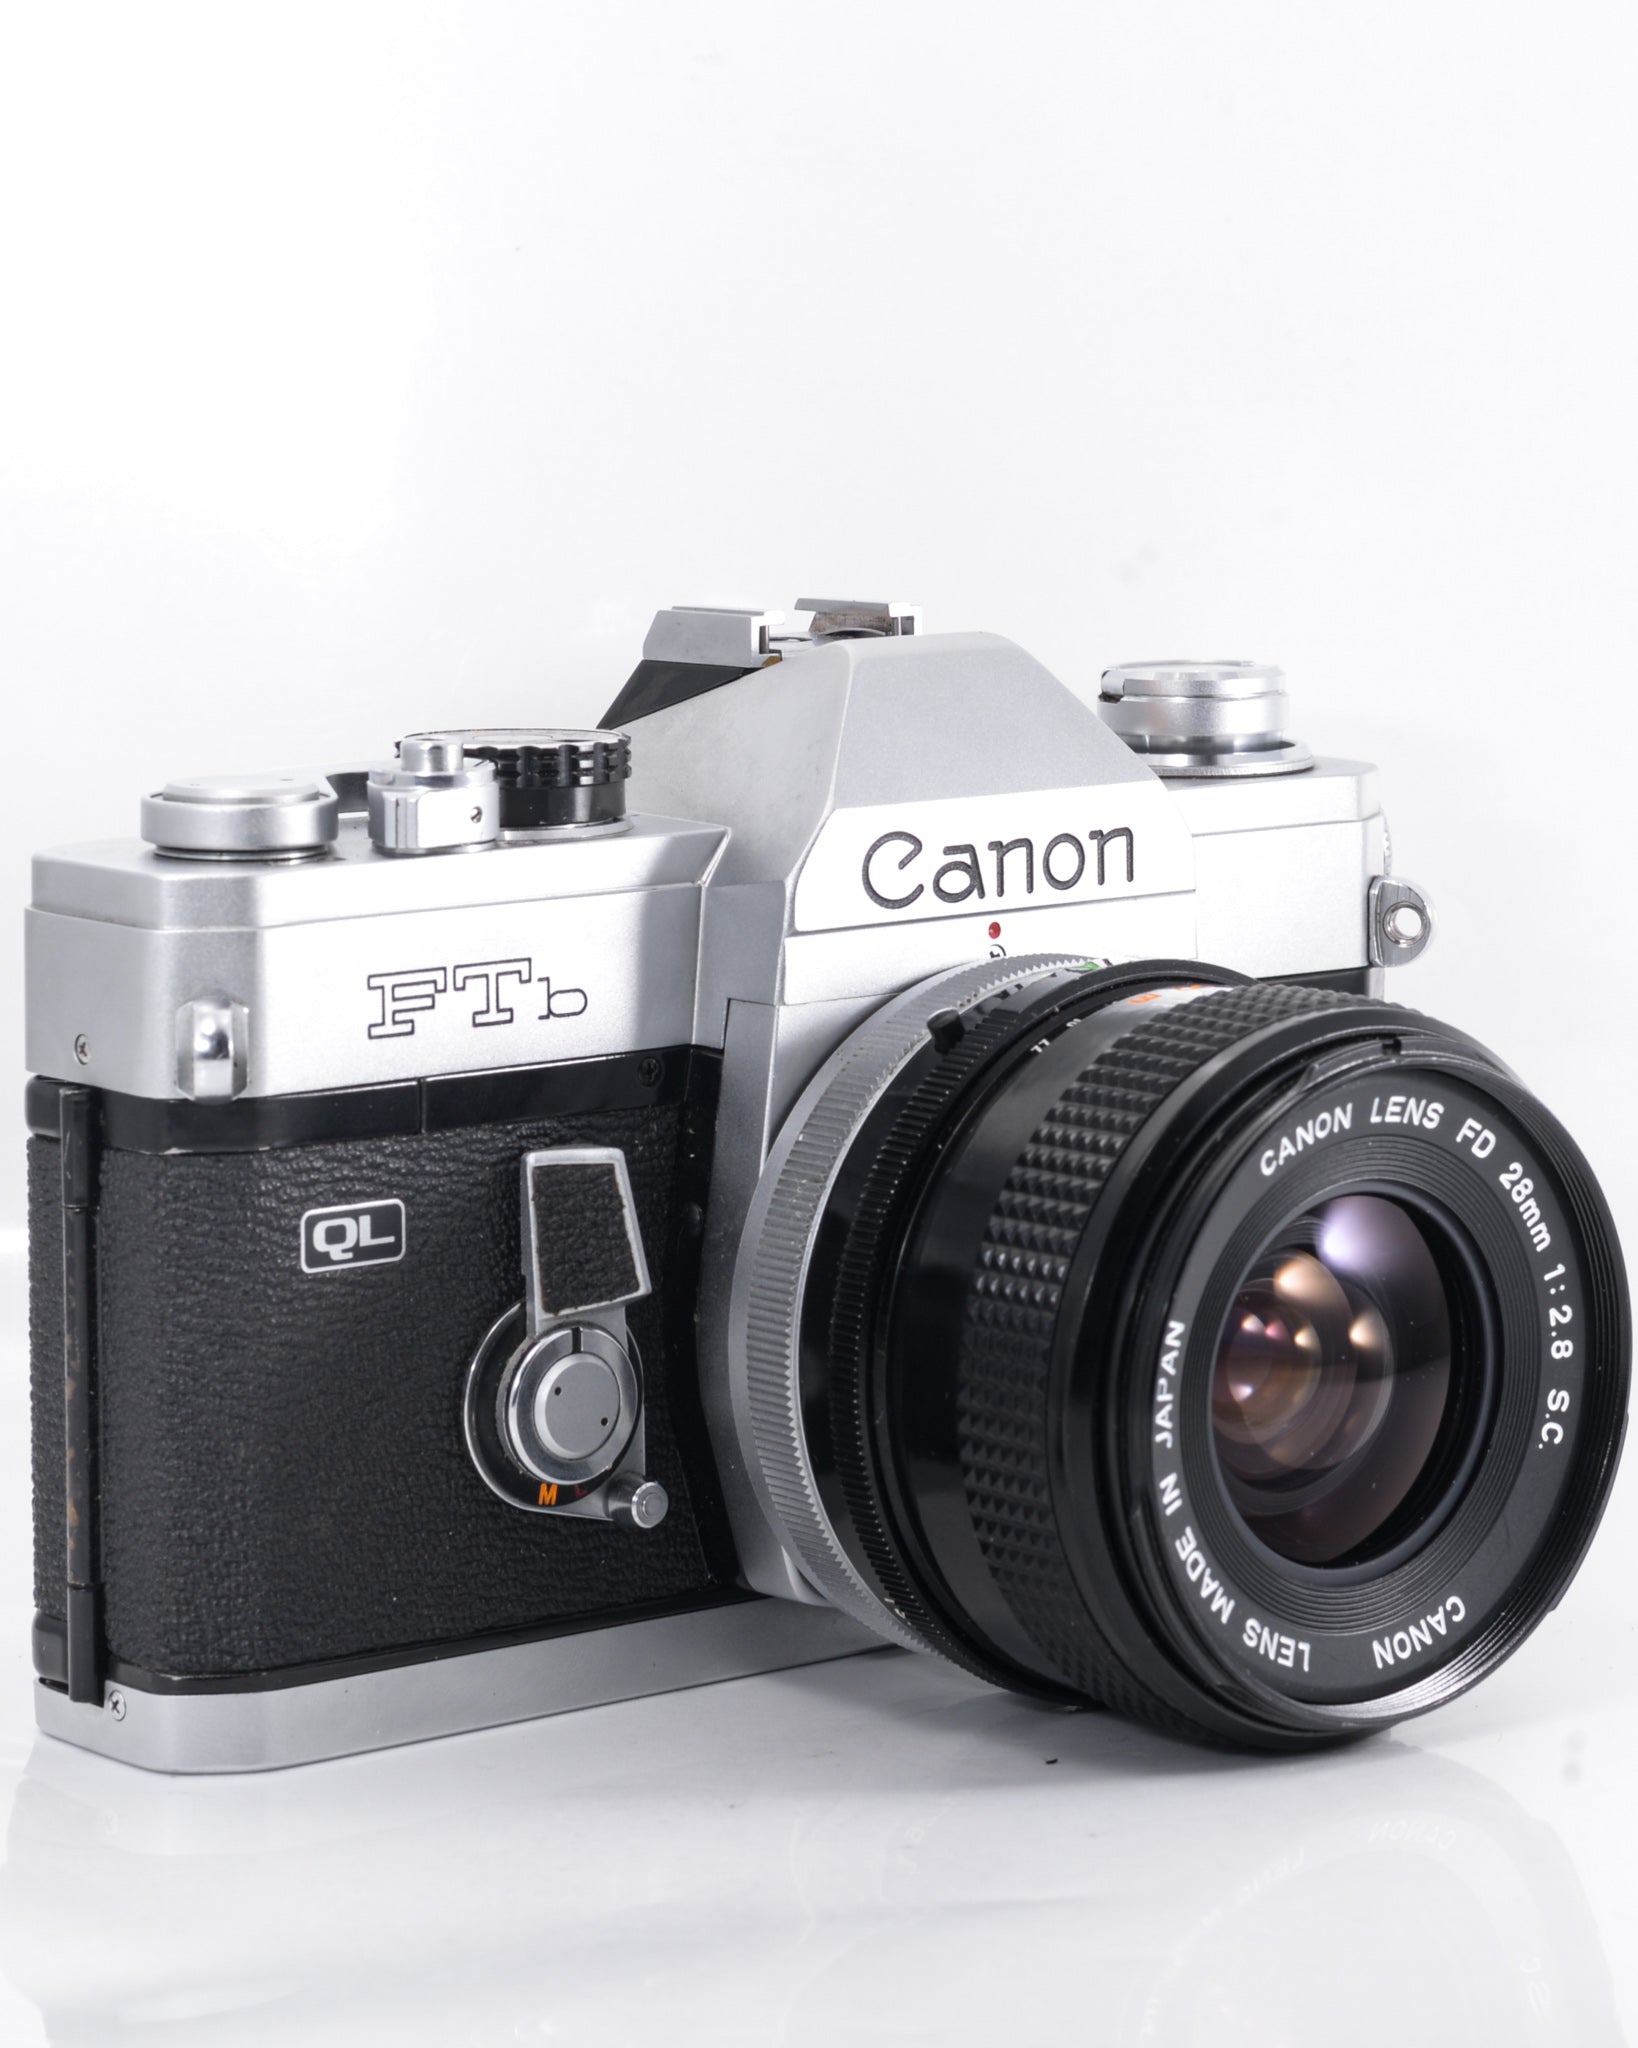 Canon FTb QL 35mm SLR film camera with 28mm f2.8 lens